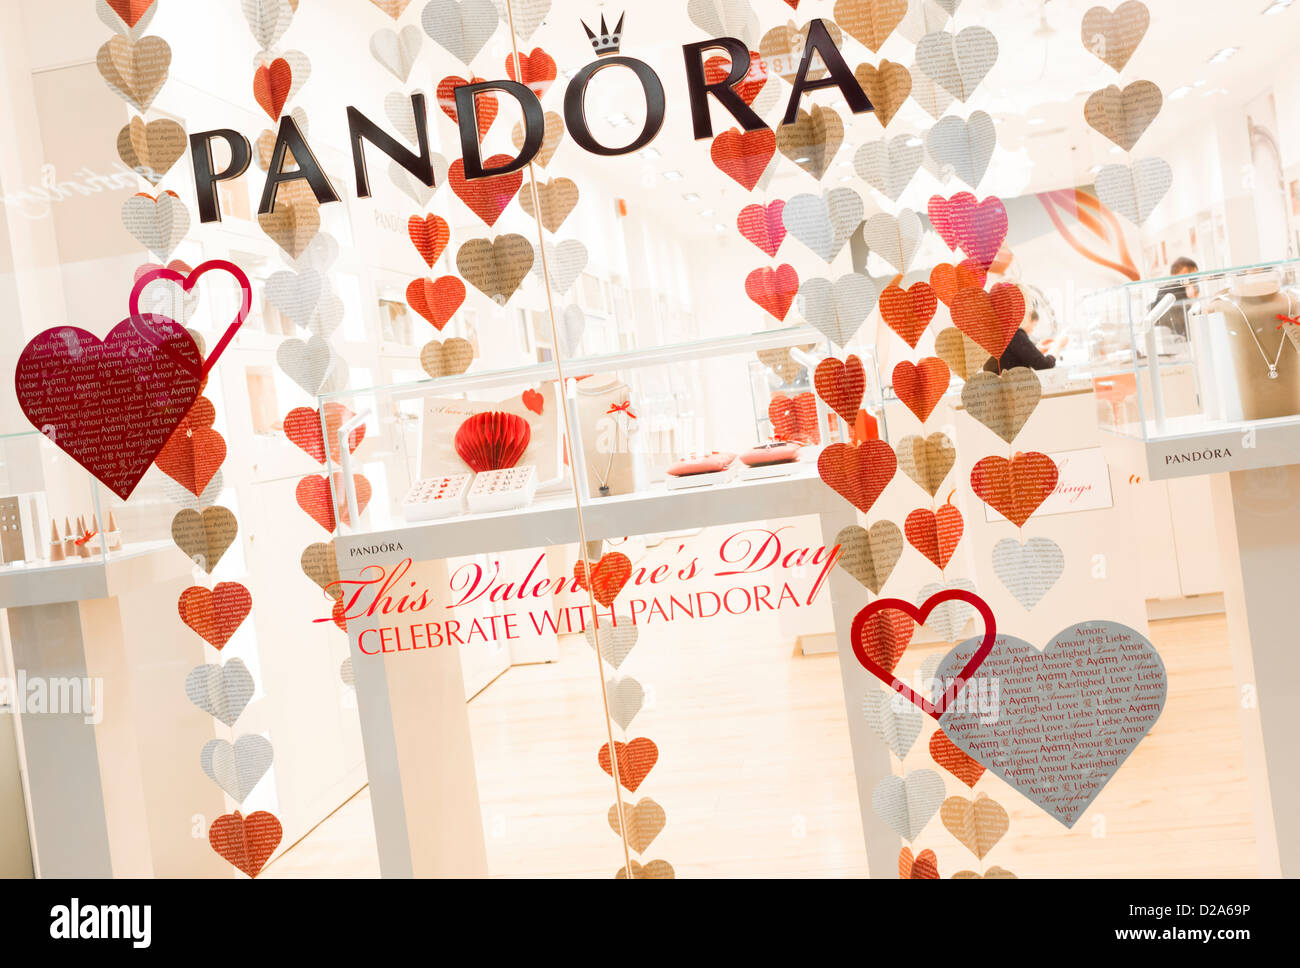 Pandora shop front prior to Valentines Day. Stock Photo